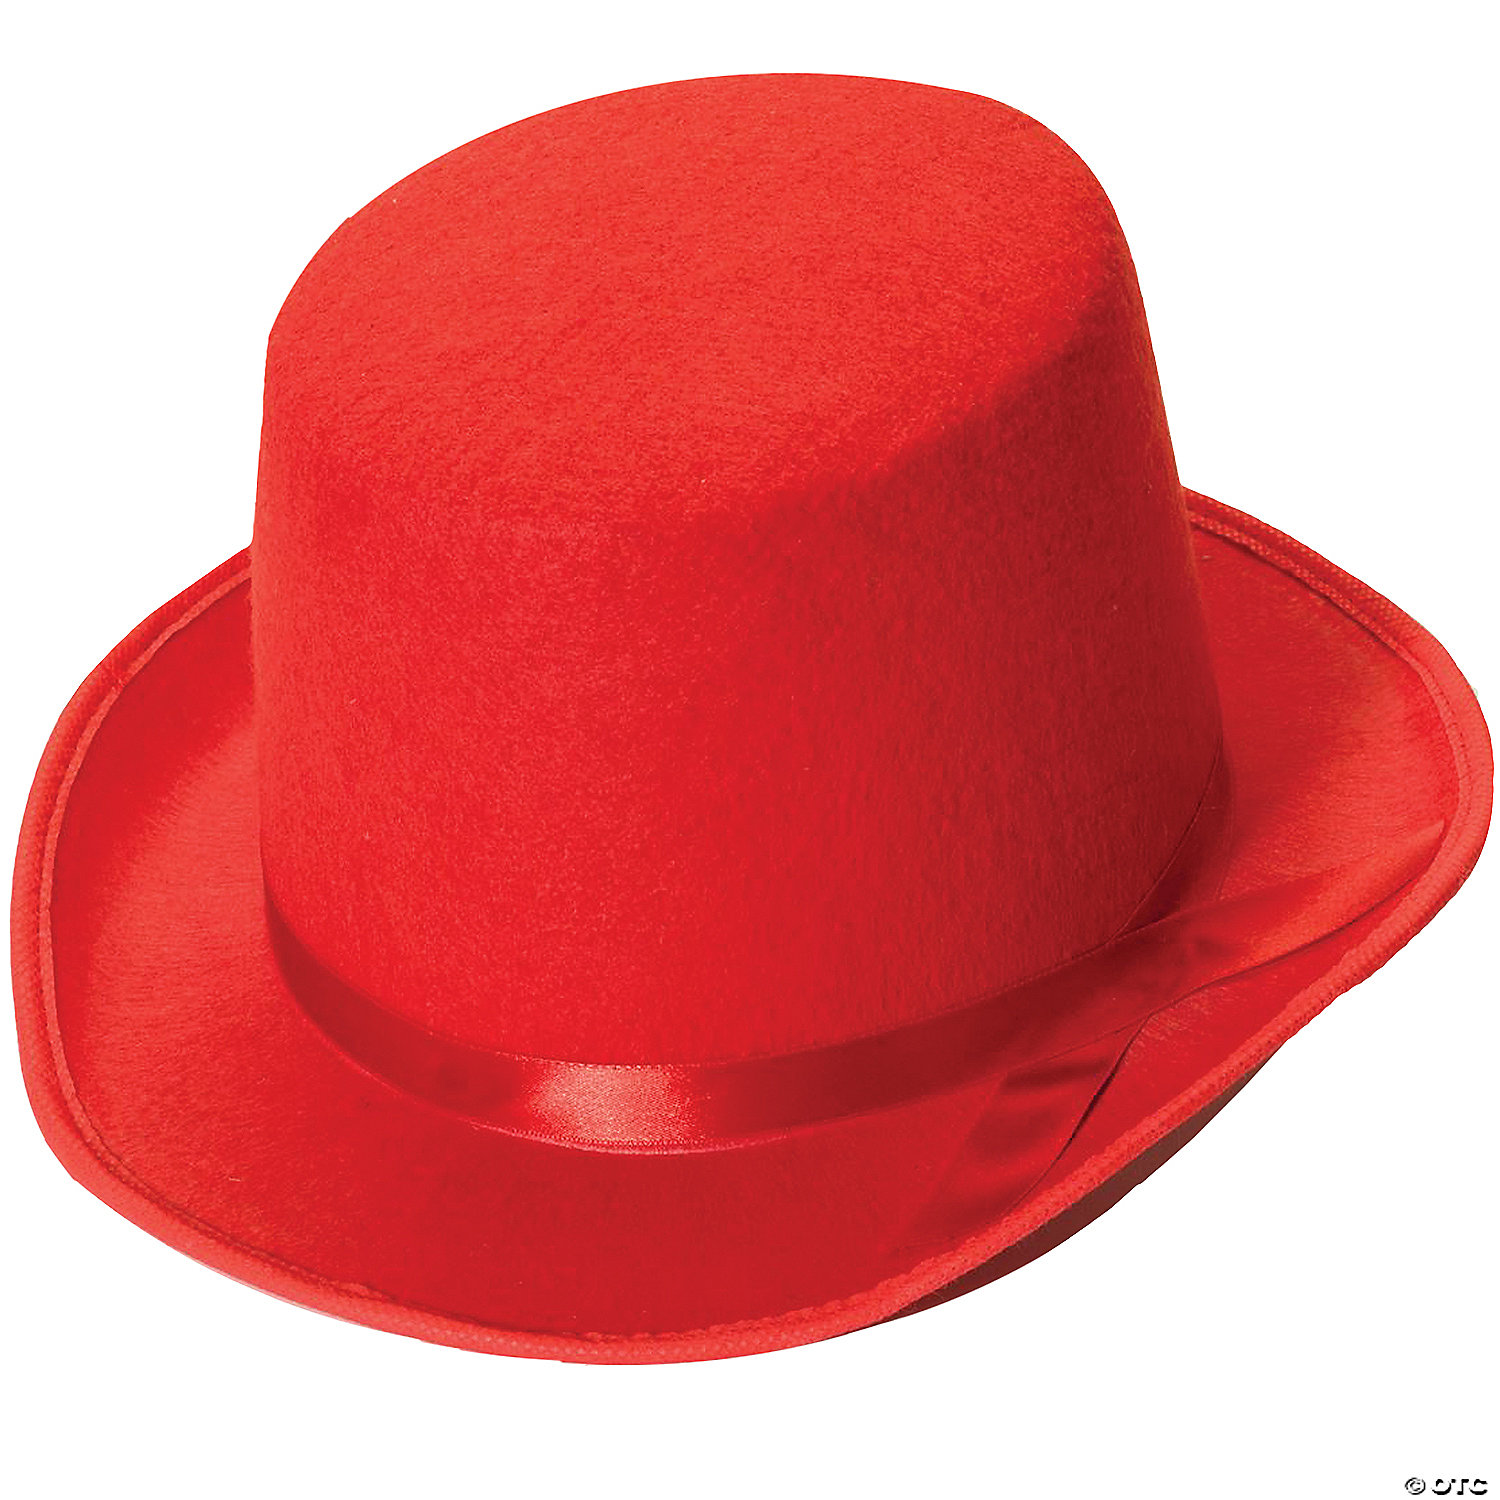 RED TOP HAT - VALENTINE'S DAY